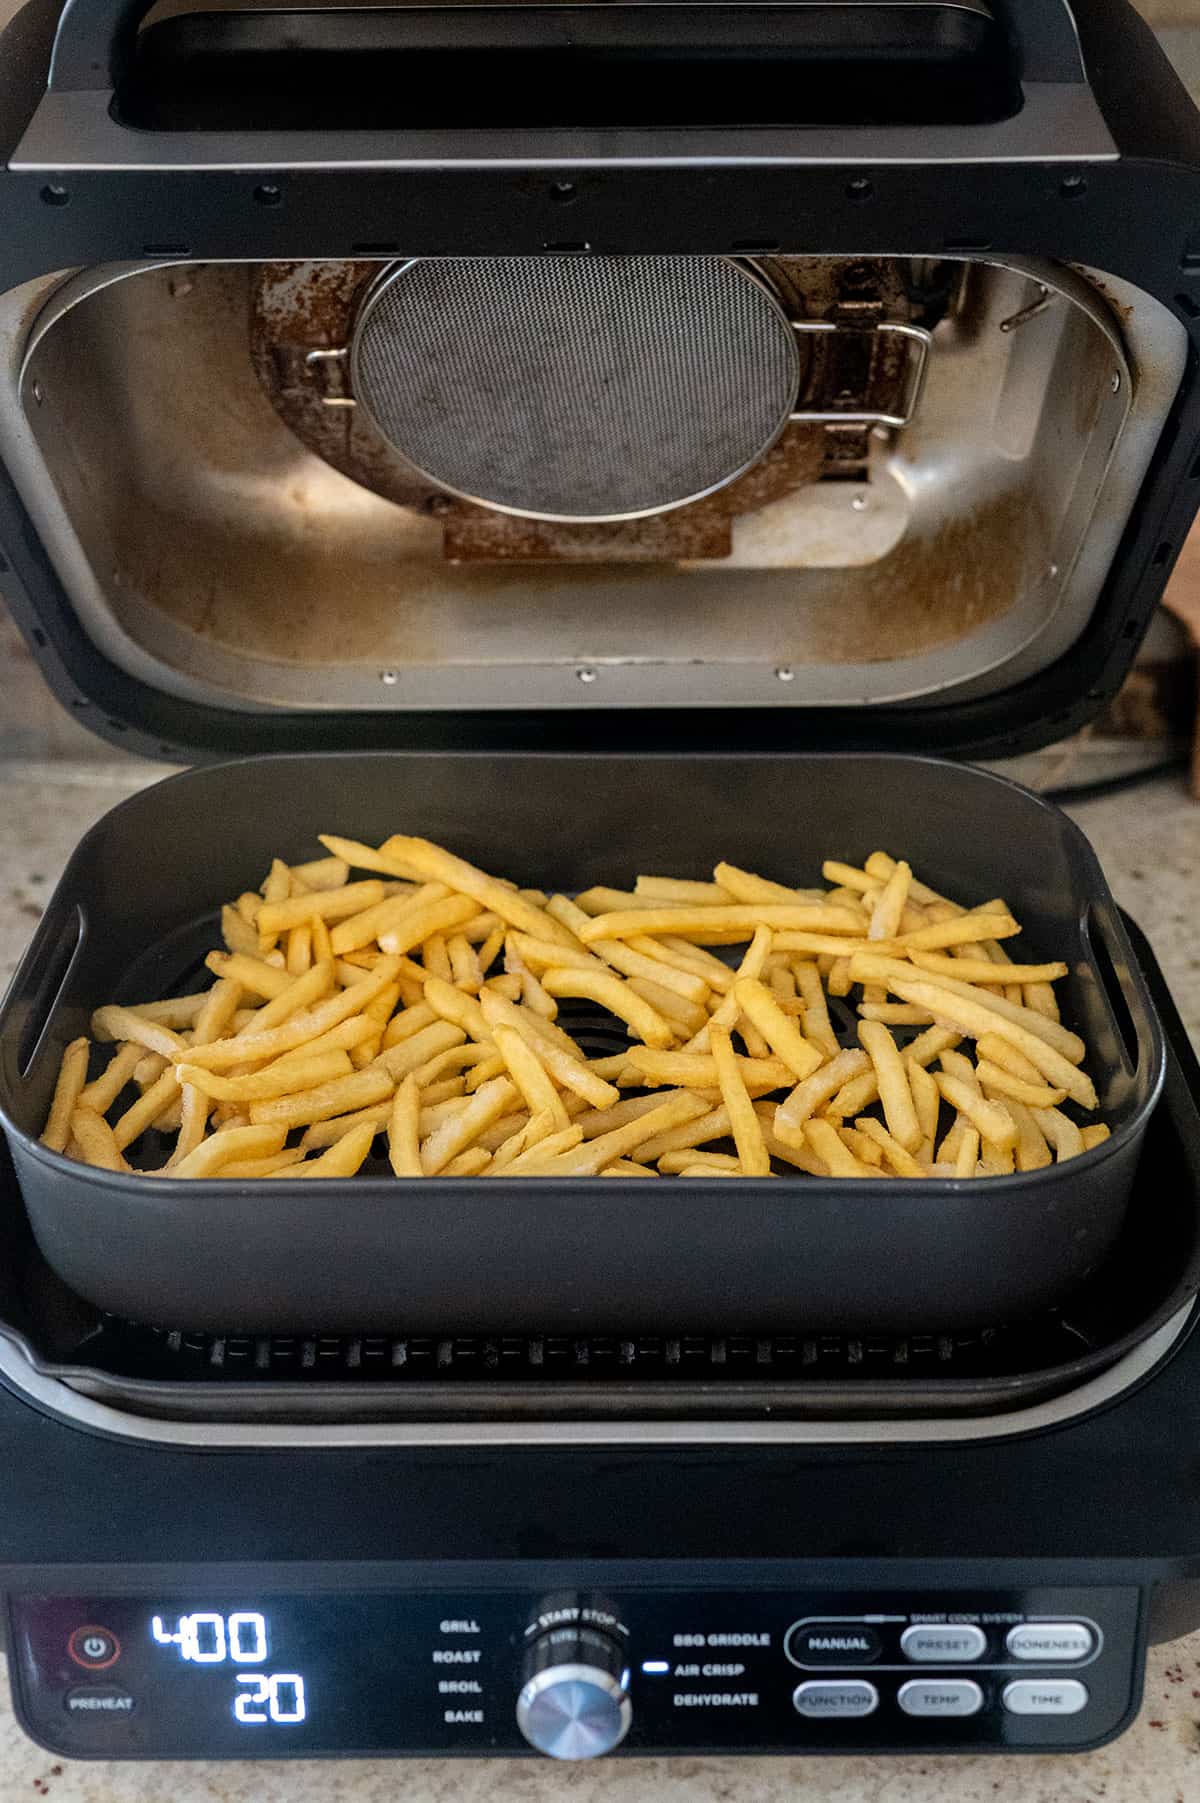 fries in Ninja Grill air crisper basket.